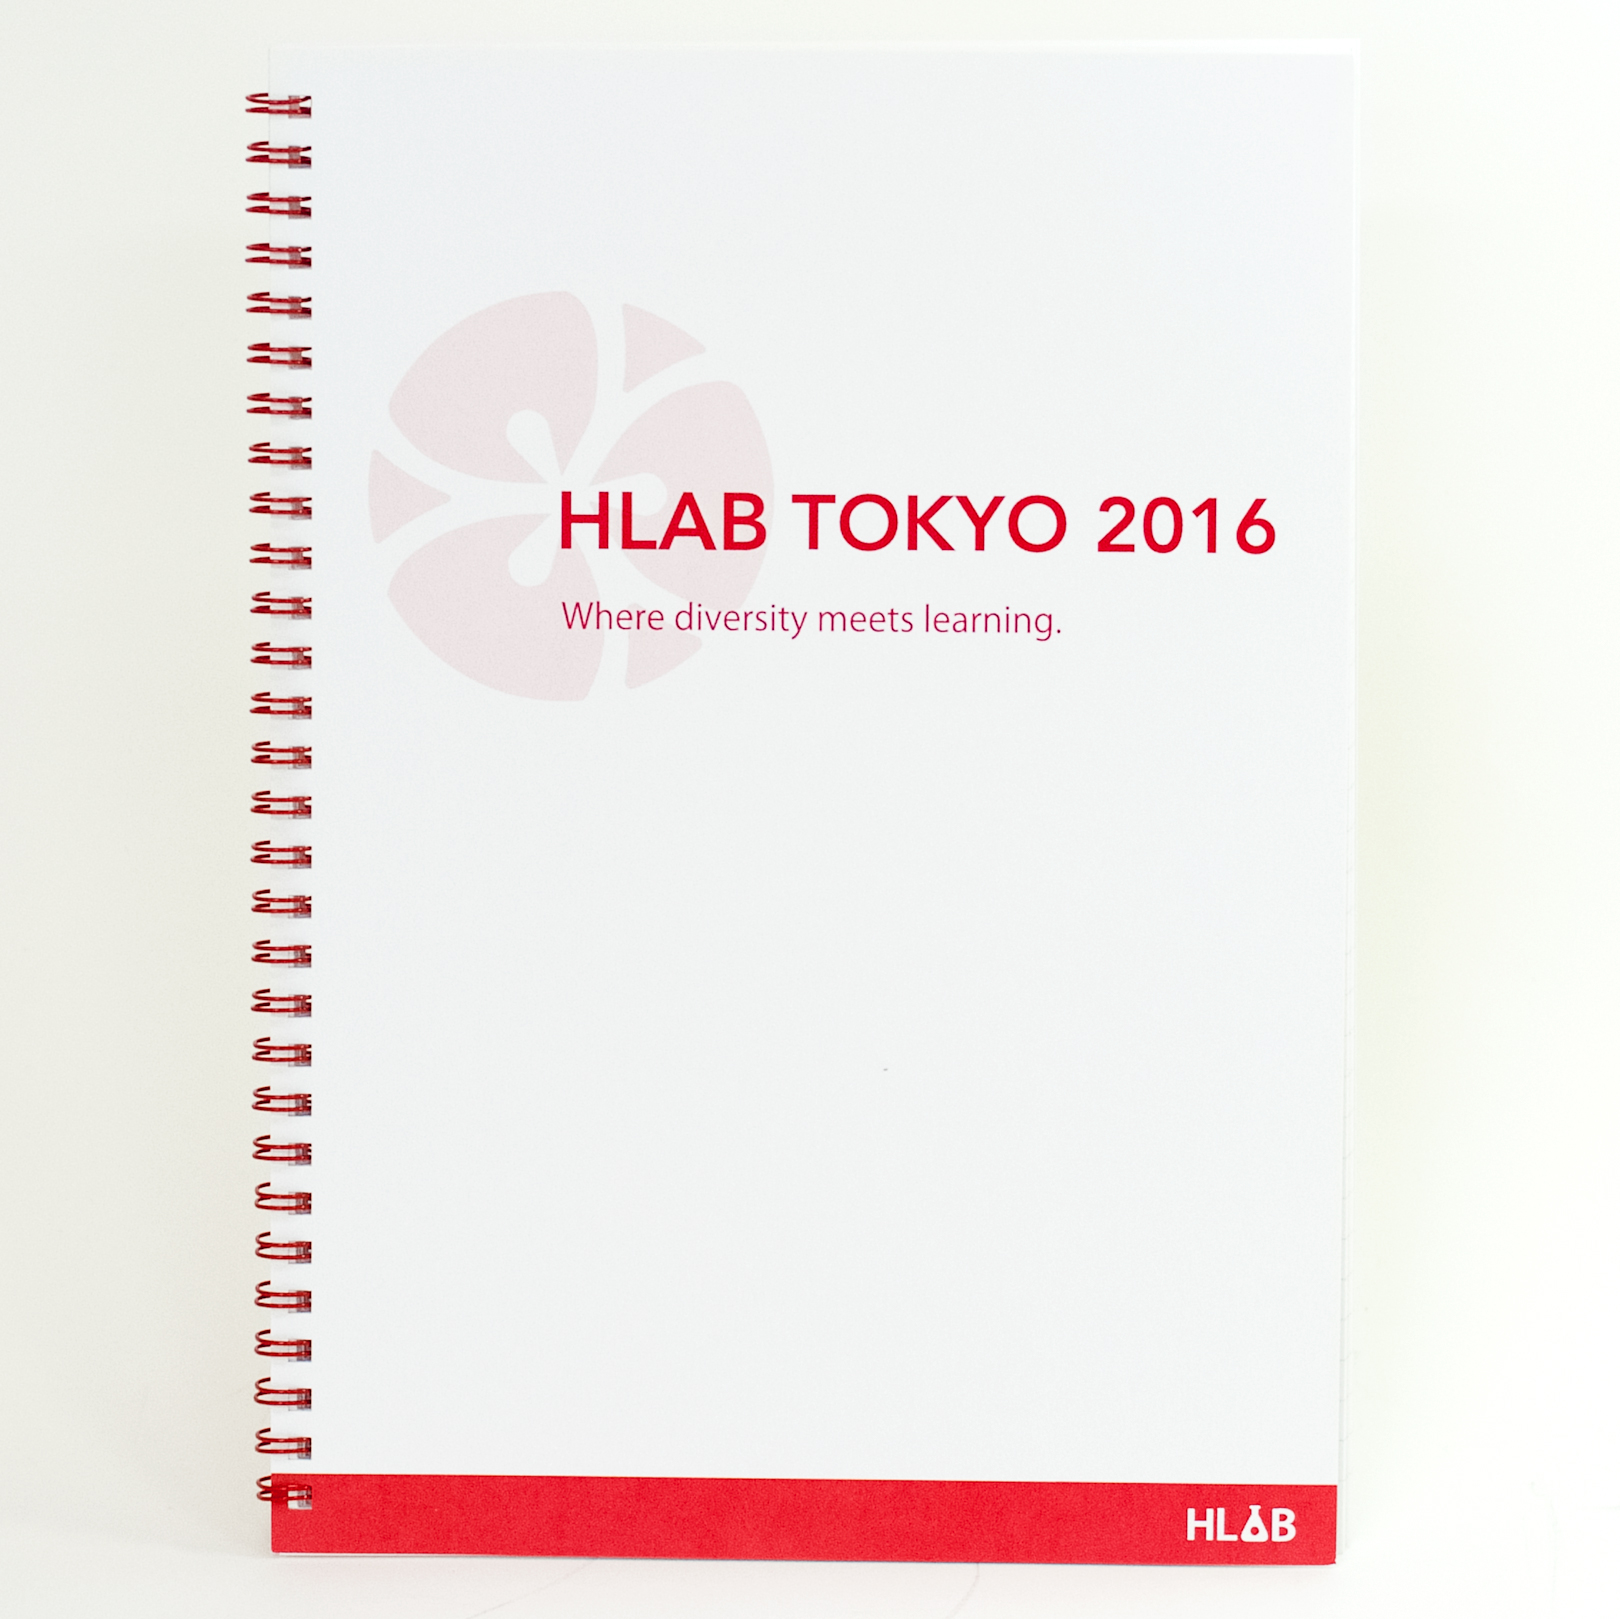 「HLAB TOKYO 2016 様」製作のオリジナルノート